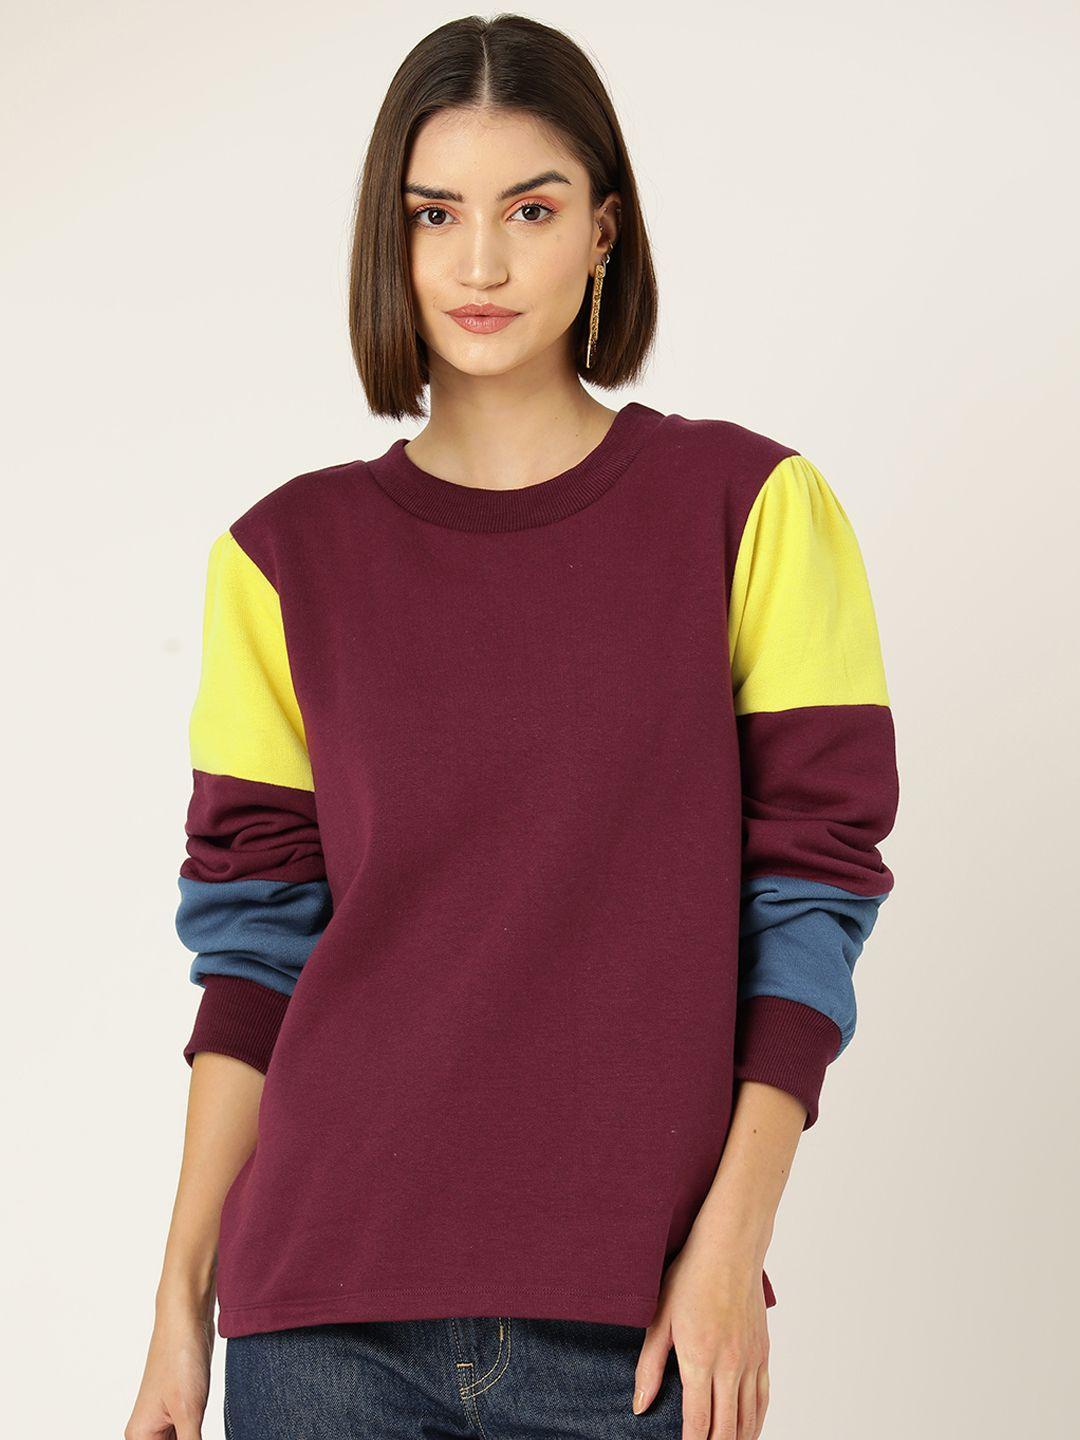 rue collection colourblocked fleece sweatshirt